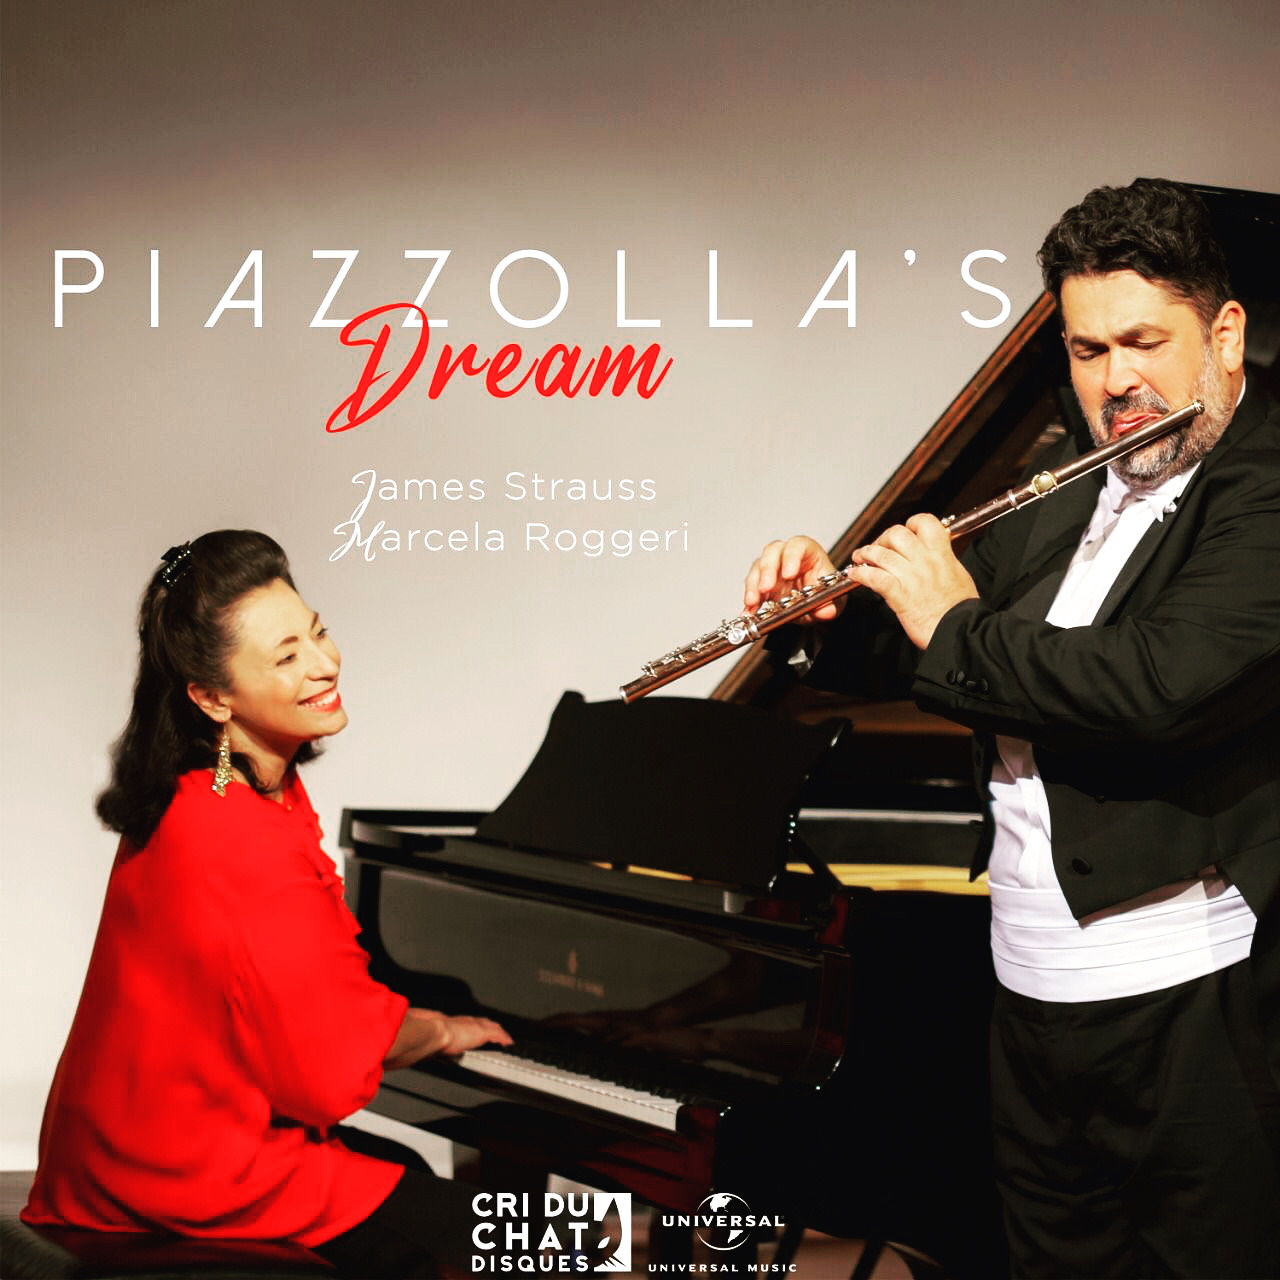 <big>"Piazzolla's Dream" with flutist James Strauss</big>